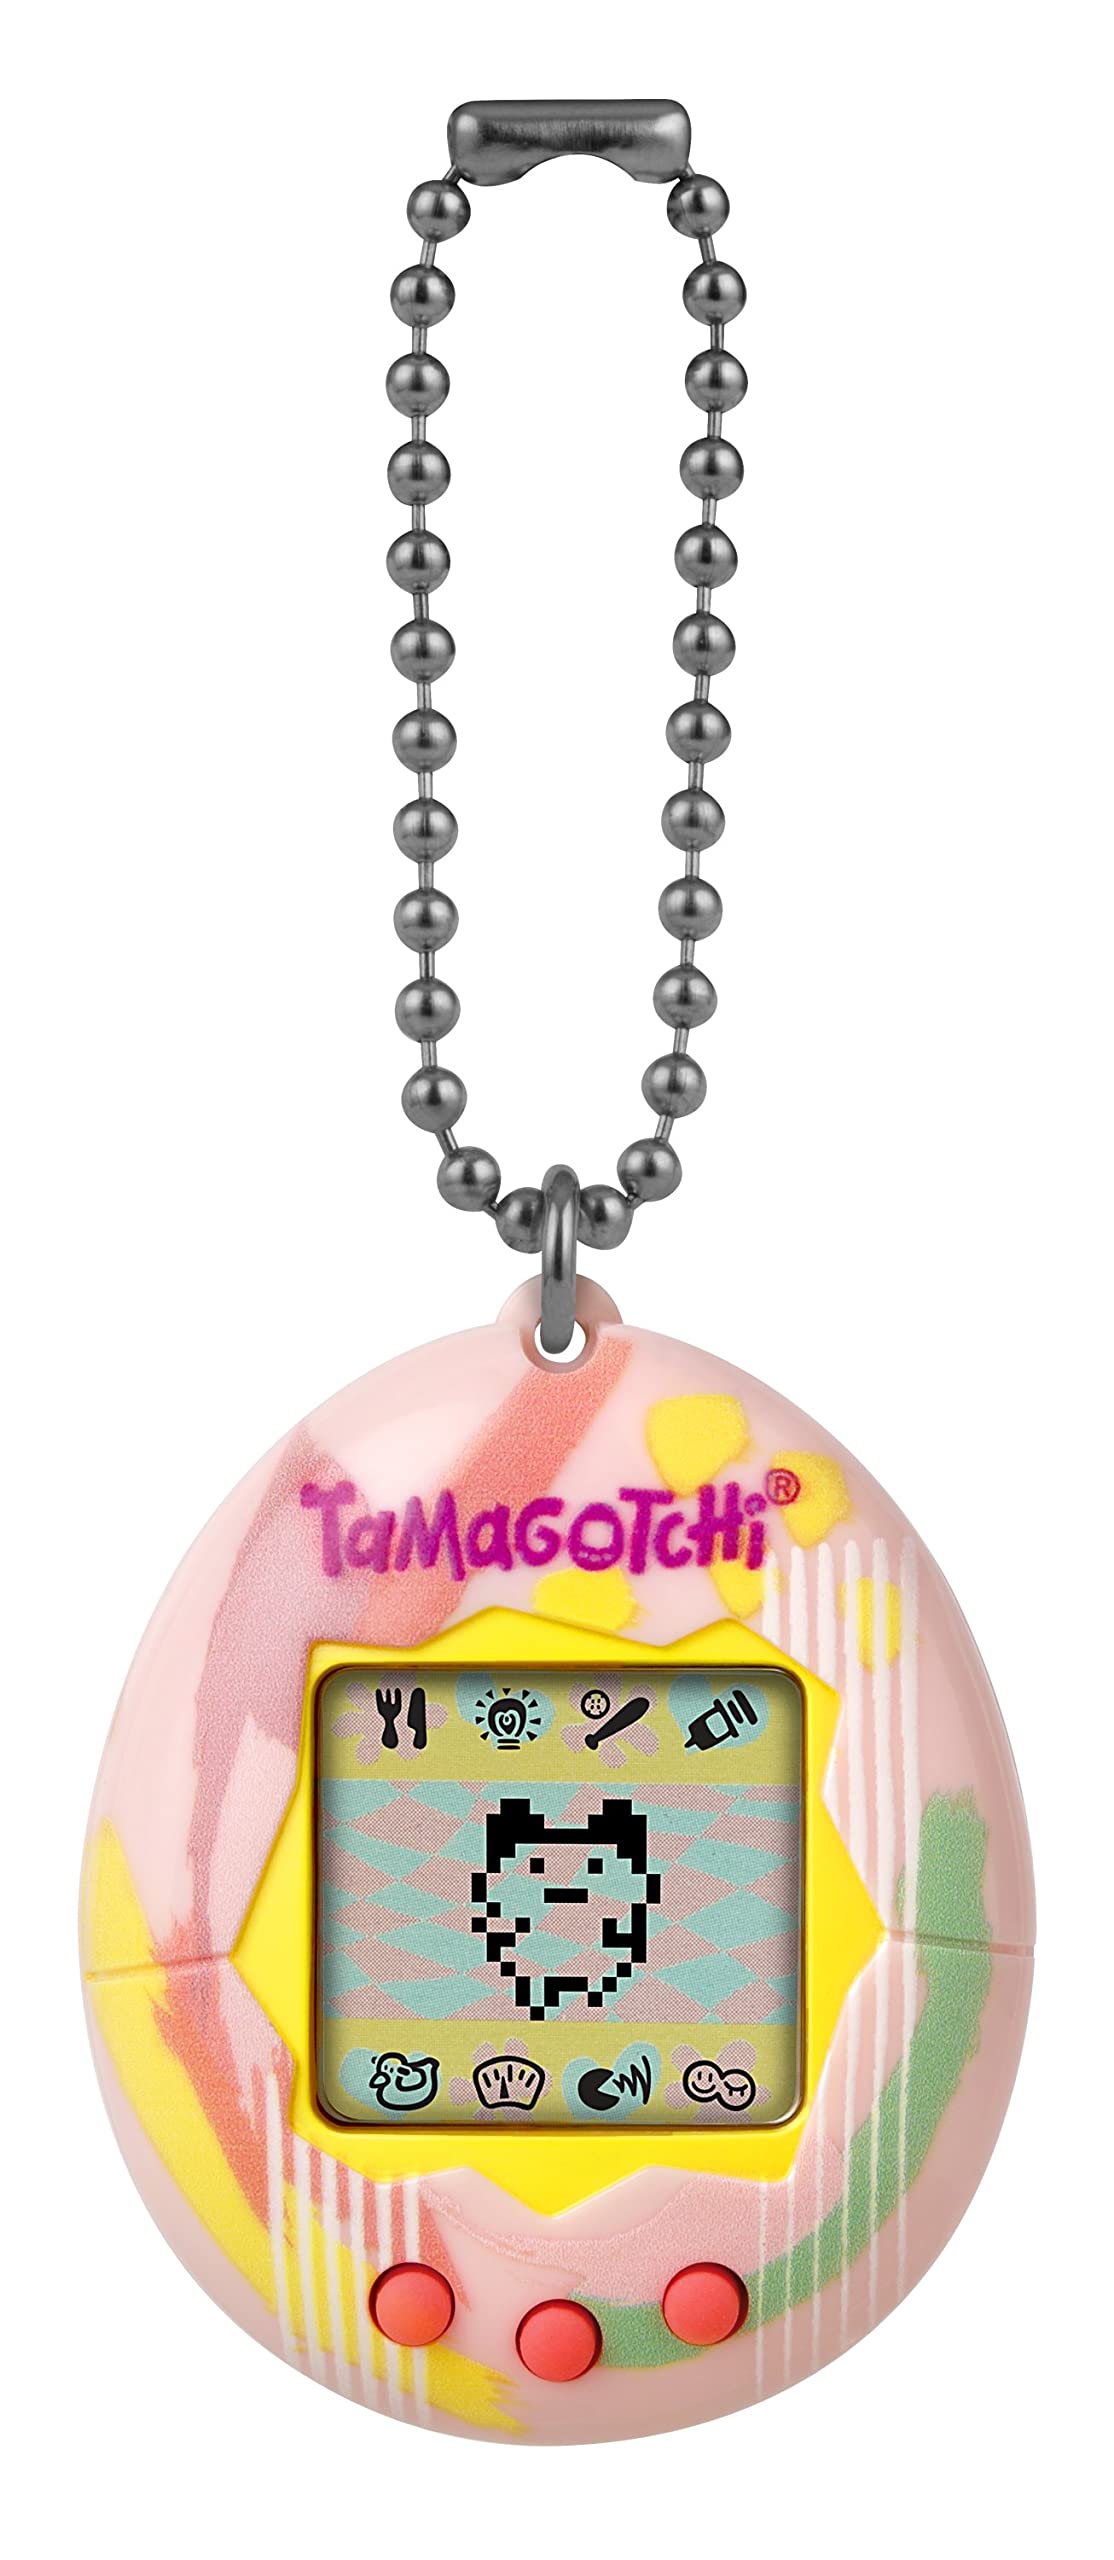 Tamagotchi Original - Art Style